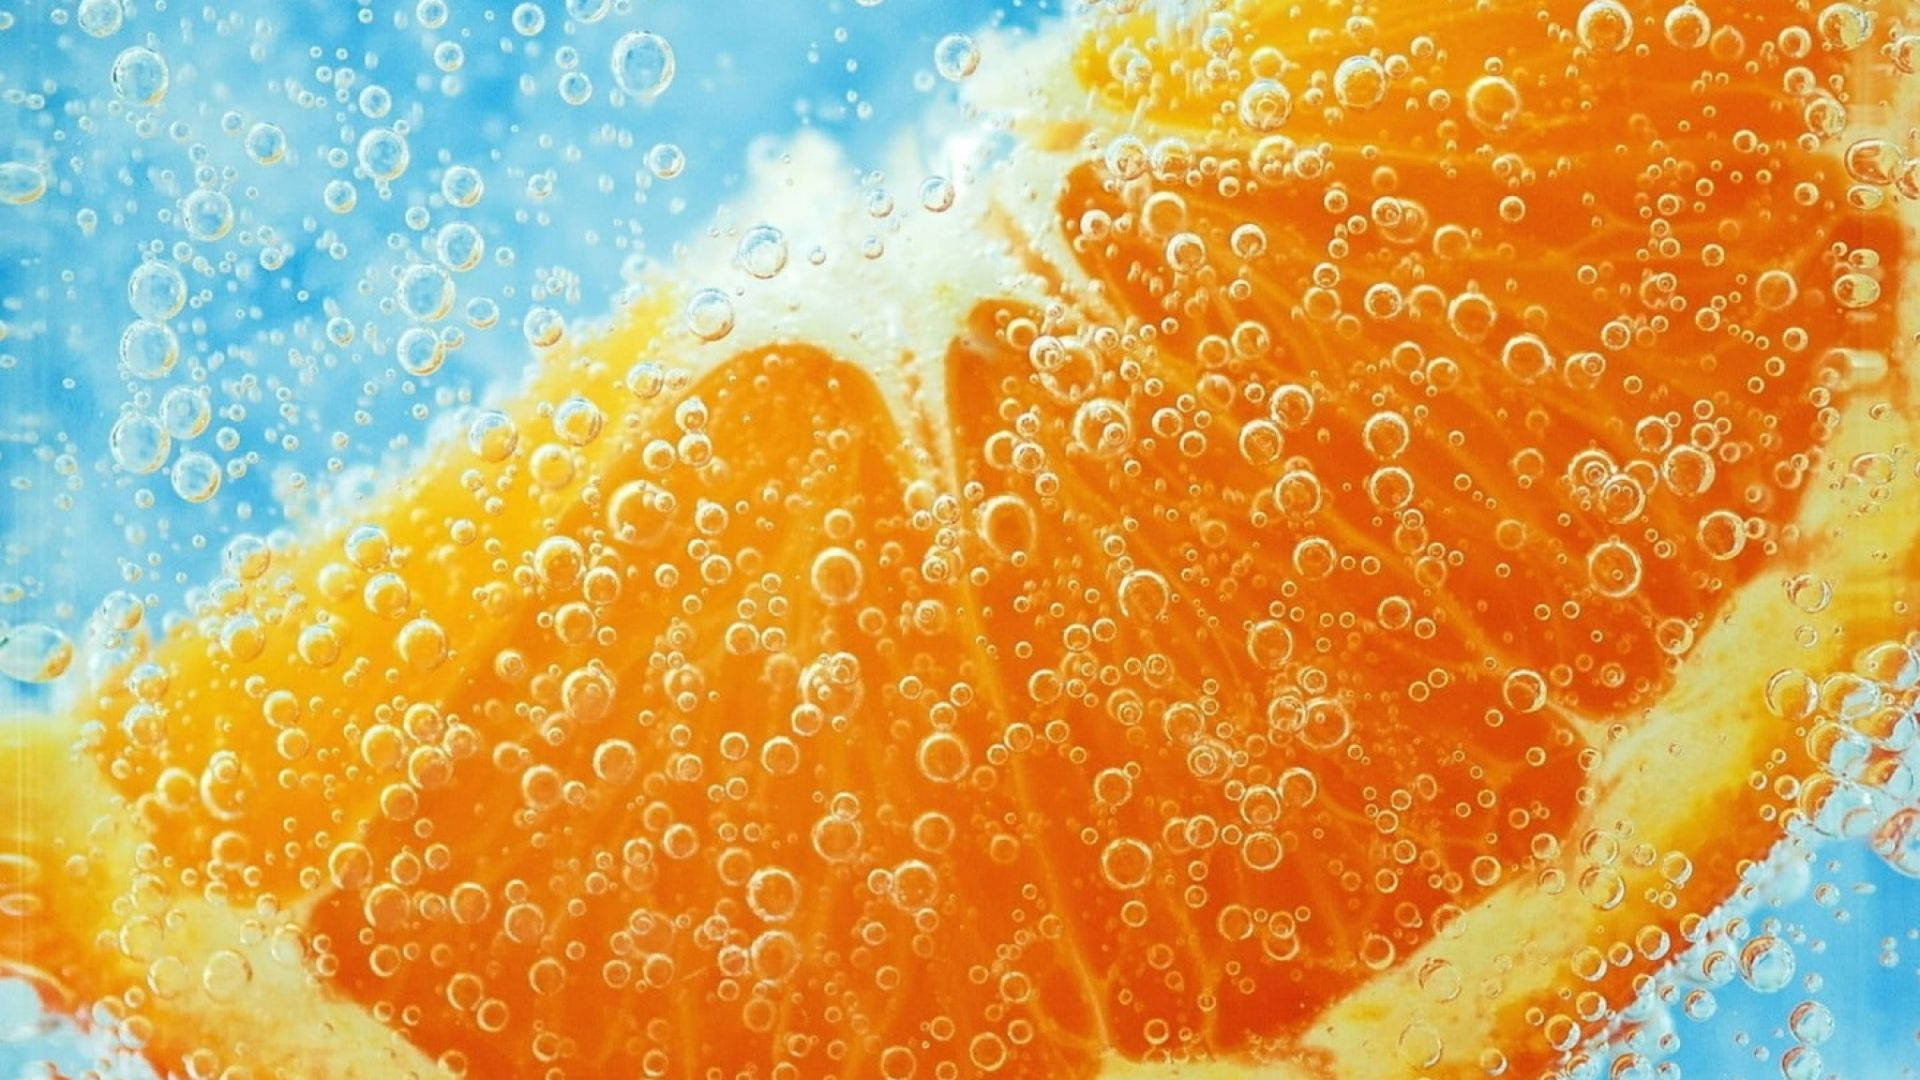 Orange Fruit With Bubbles Background